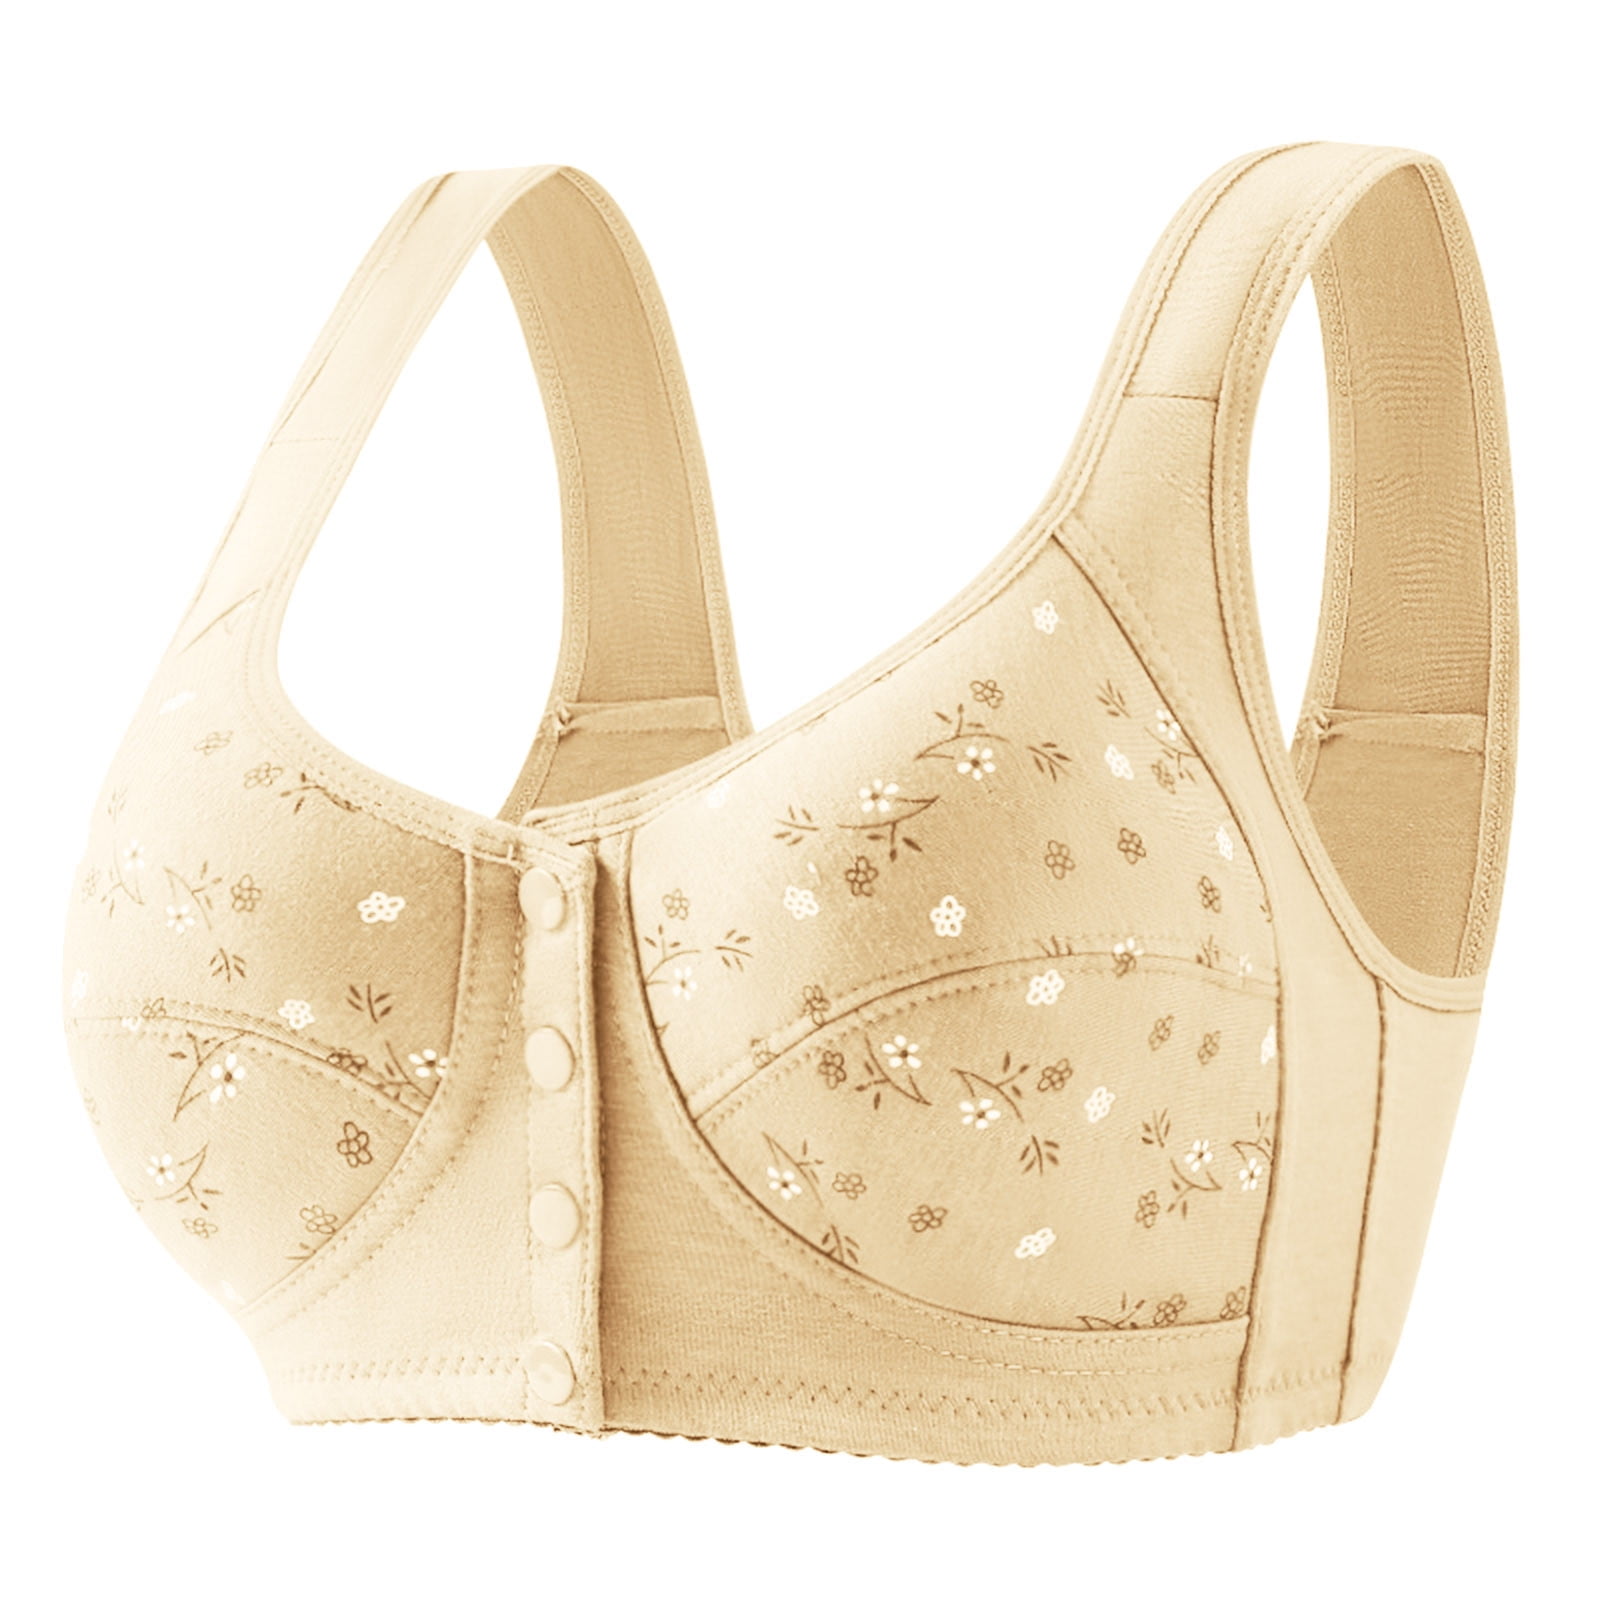 Fsqjgq Nursing Bras for Breastfeeding Plus Size Seamless Wireless Bra  Underwear Maternity Bras Front Closure Sports Bras for Women 52/120 